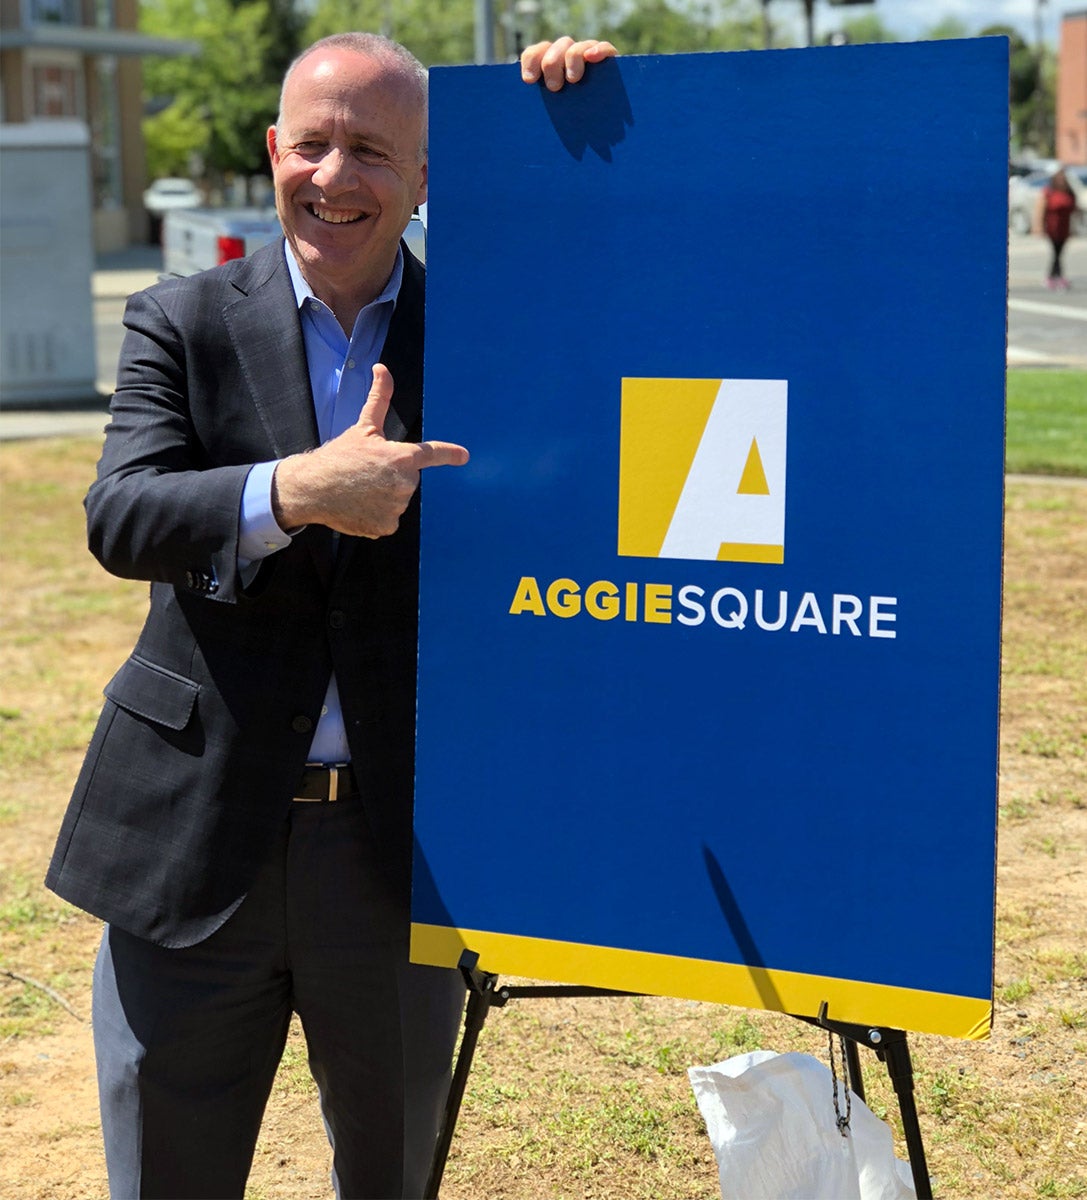 Sacramento Mayor Darrell Steinberg poses with Aggie Square sign.